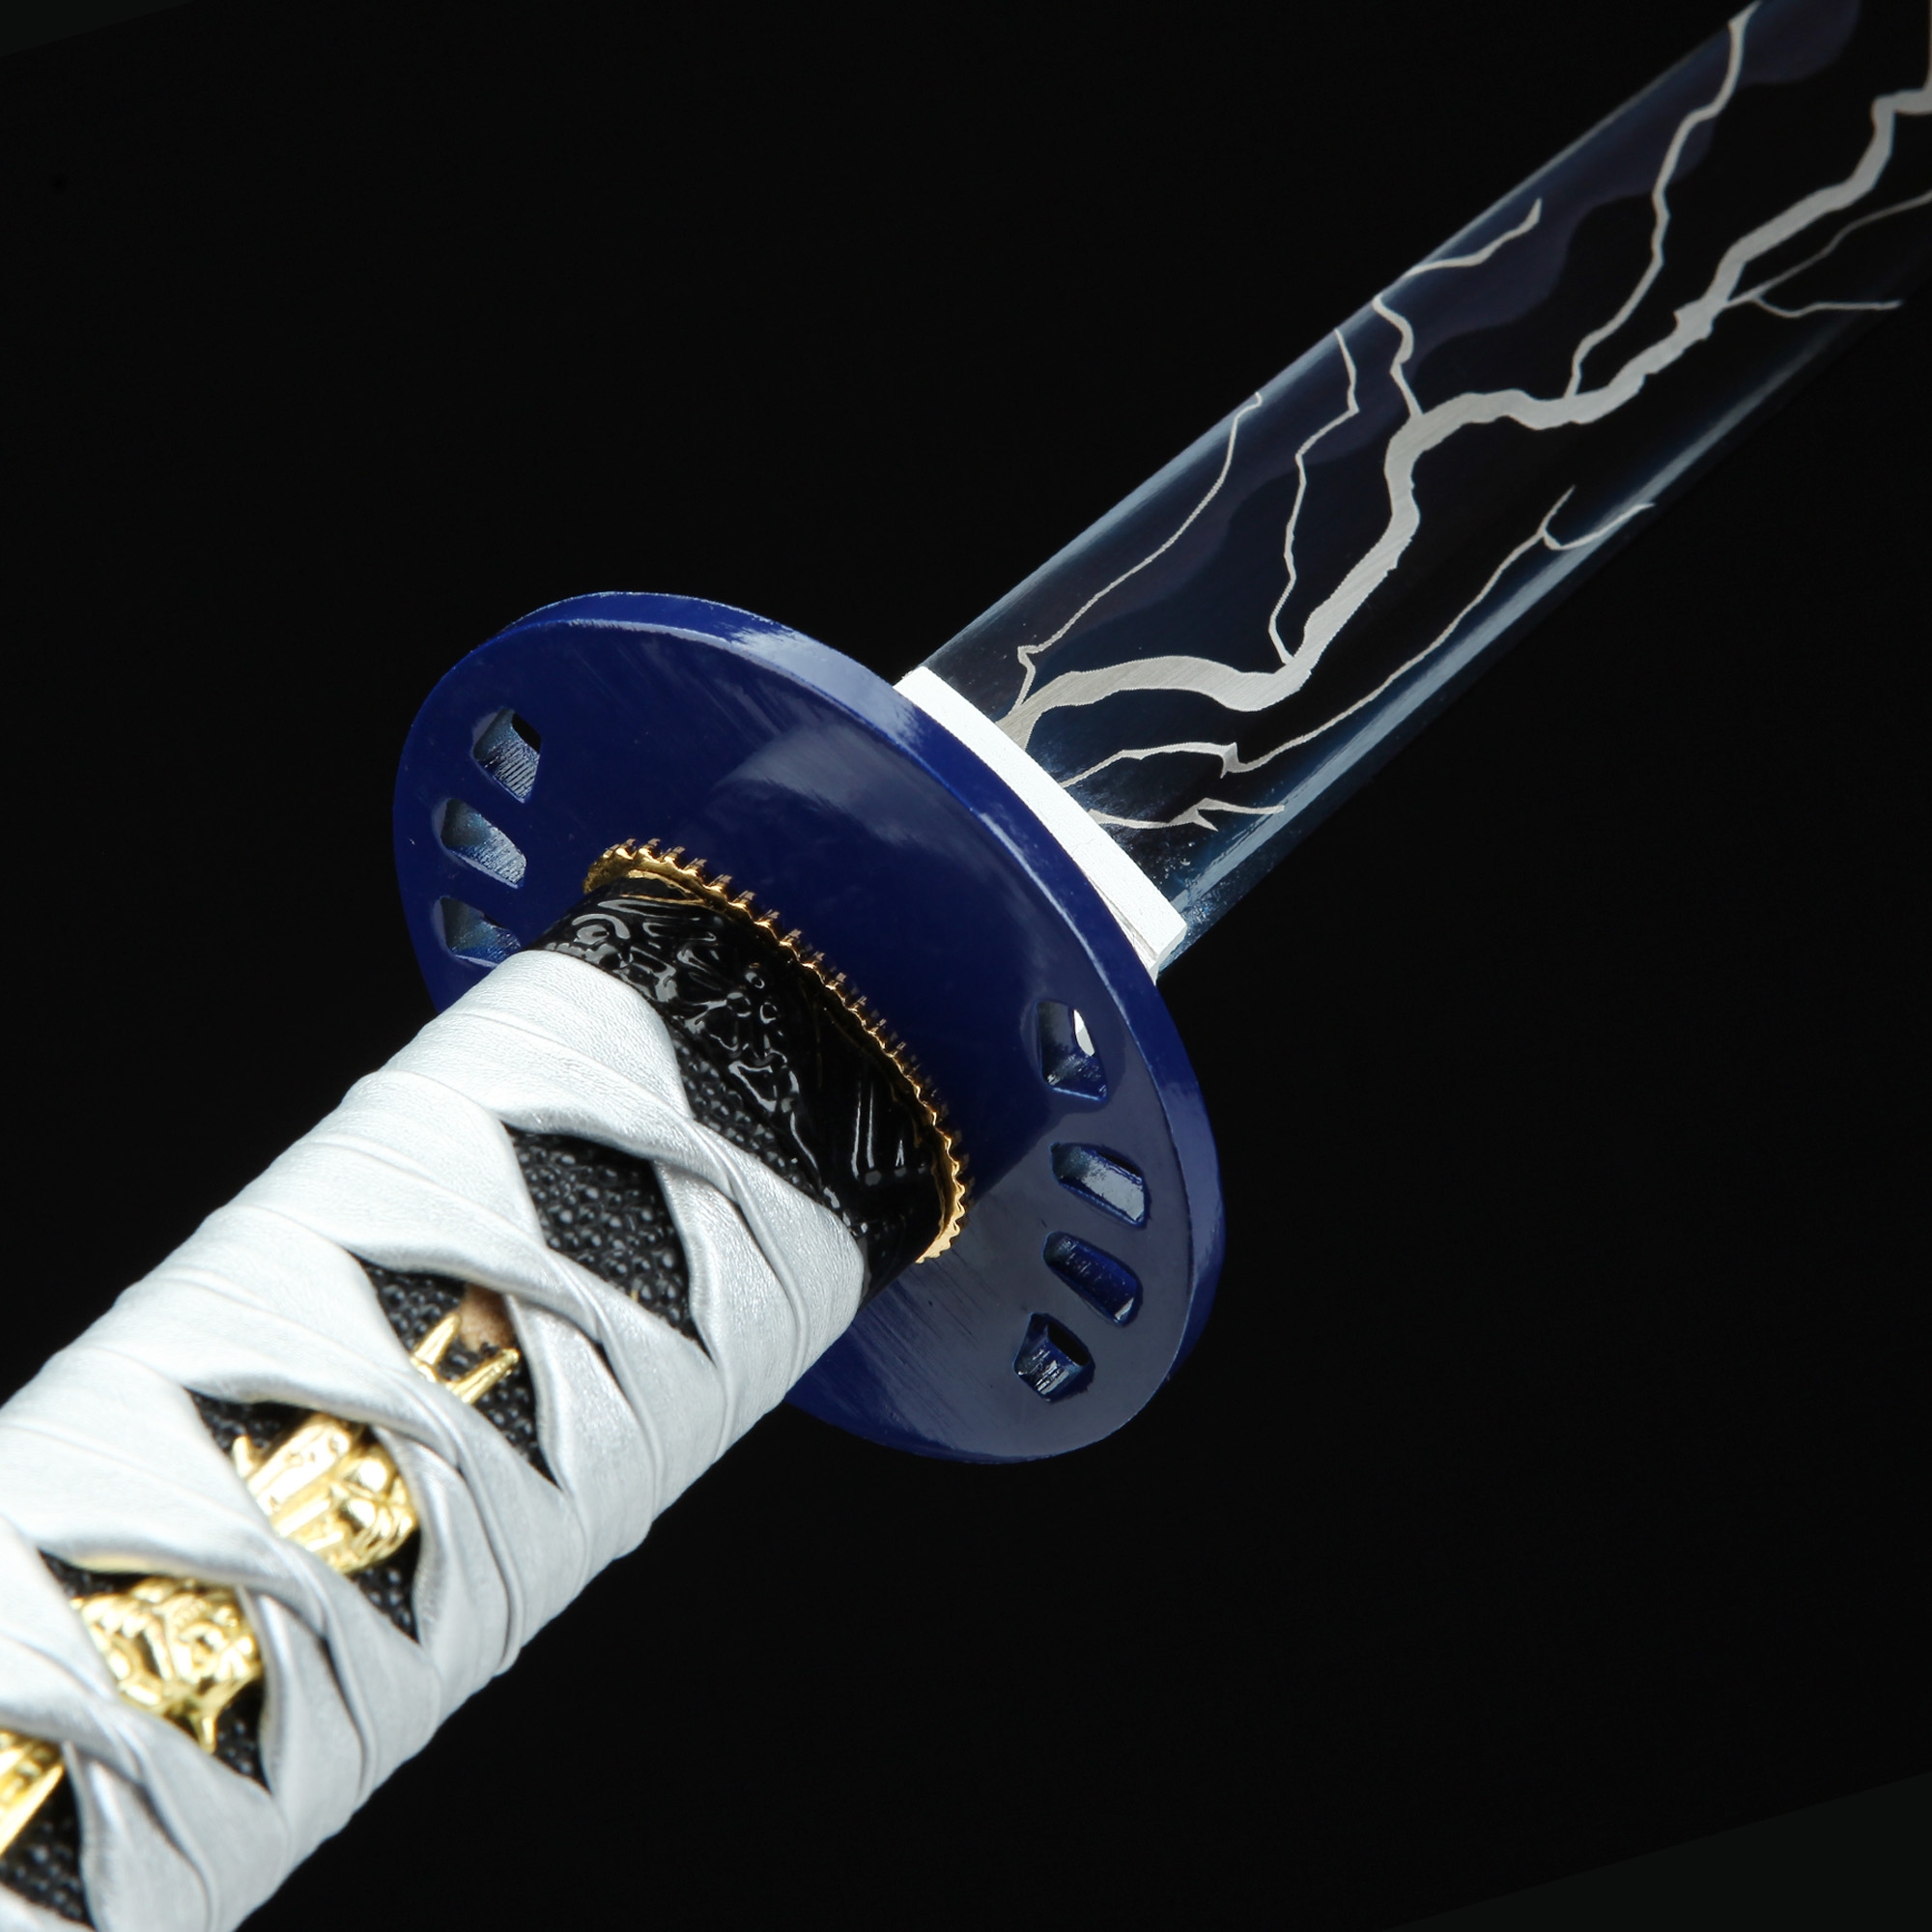 Blue And White Katana | Handmade Japanese Katana Sword With Blue Blade